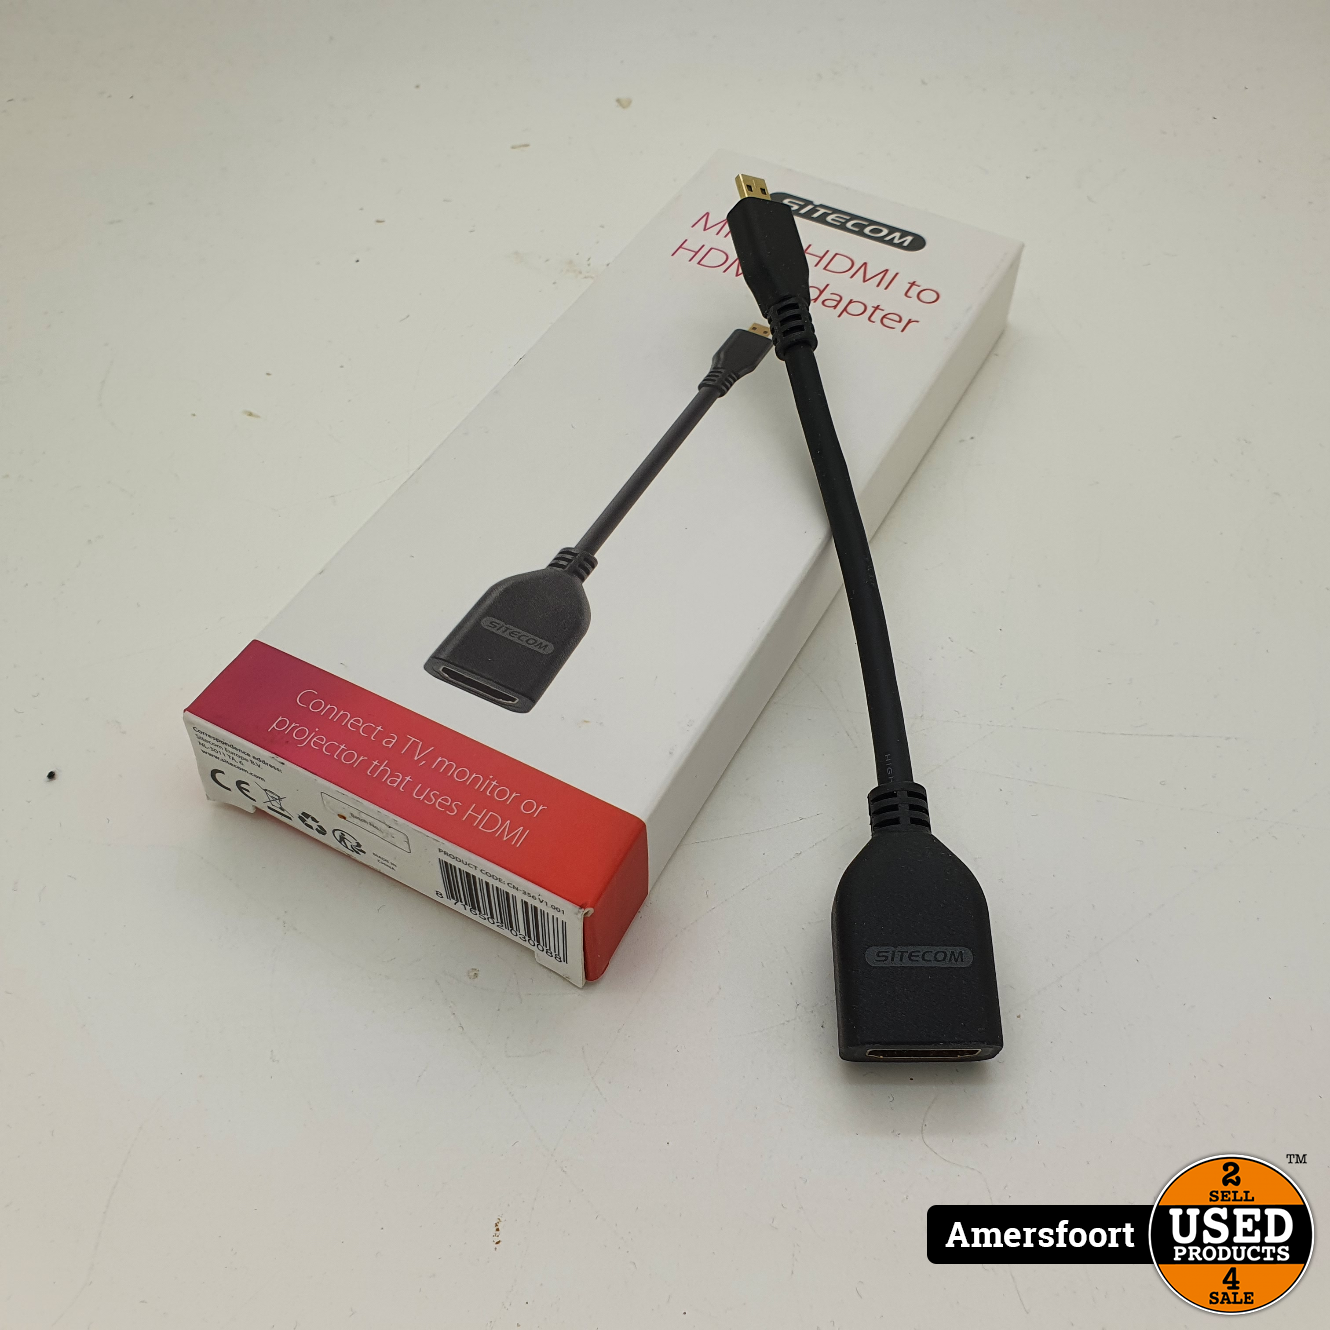 Onze onderneming Madison gordijn Sitecom Micro-HDMI to HDMI Adapter | CN-356 - Used Products Amersfoort